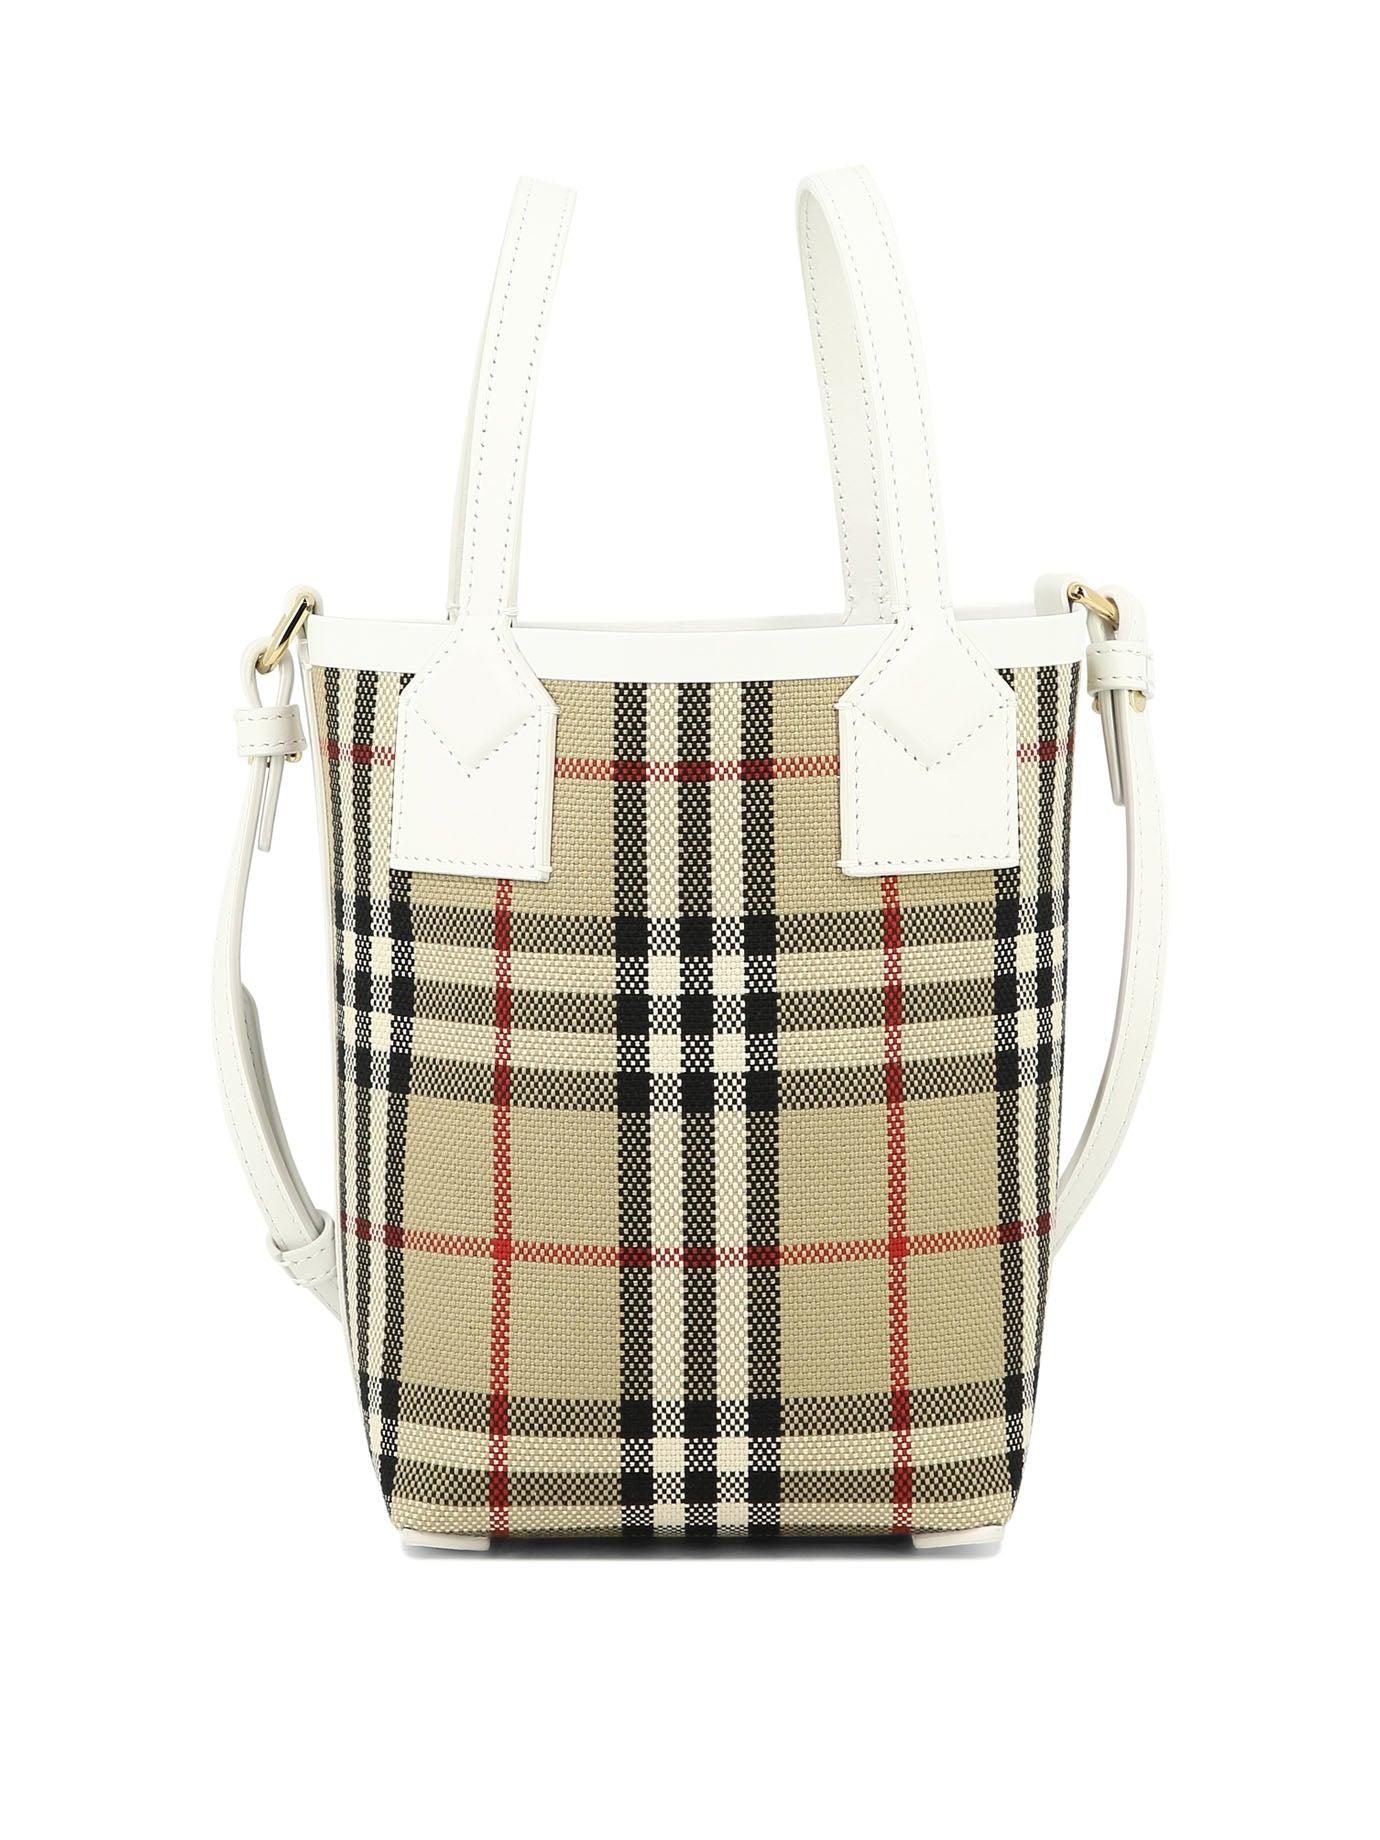 Burberry Exterior Bags & Handbags for Women | Authenticity Guaranteed | eBay